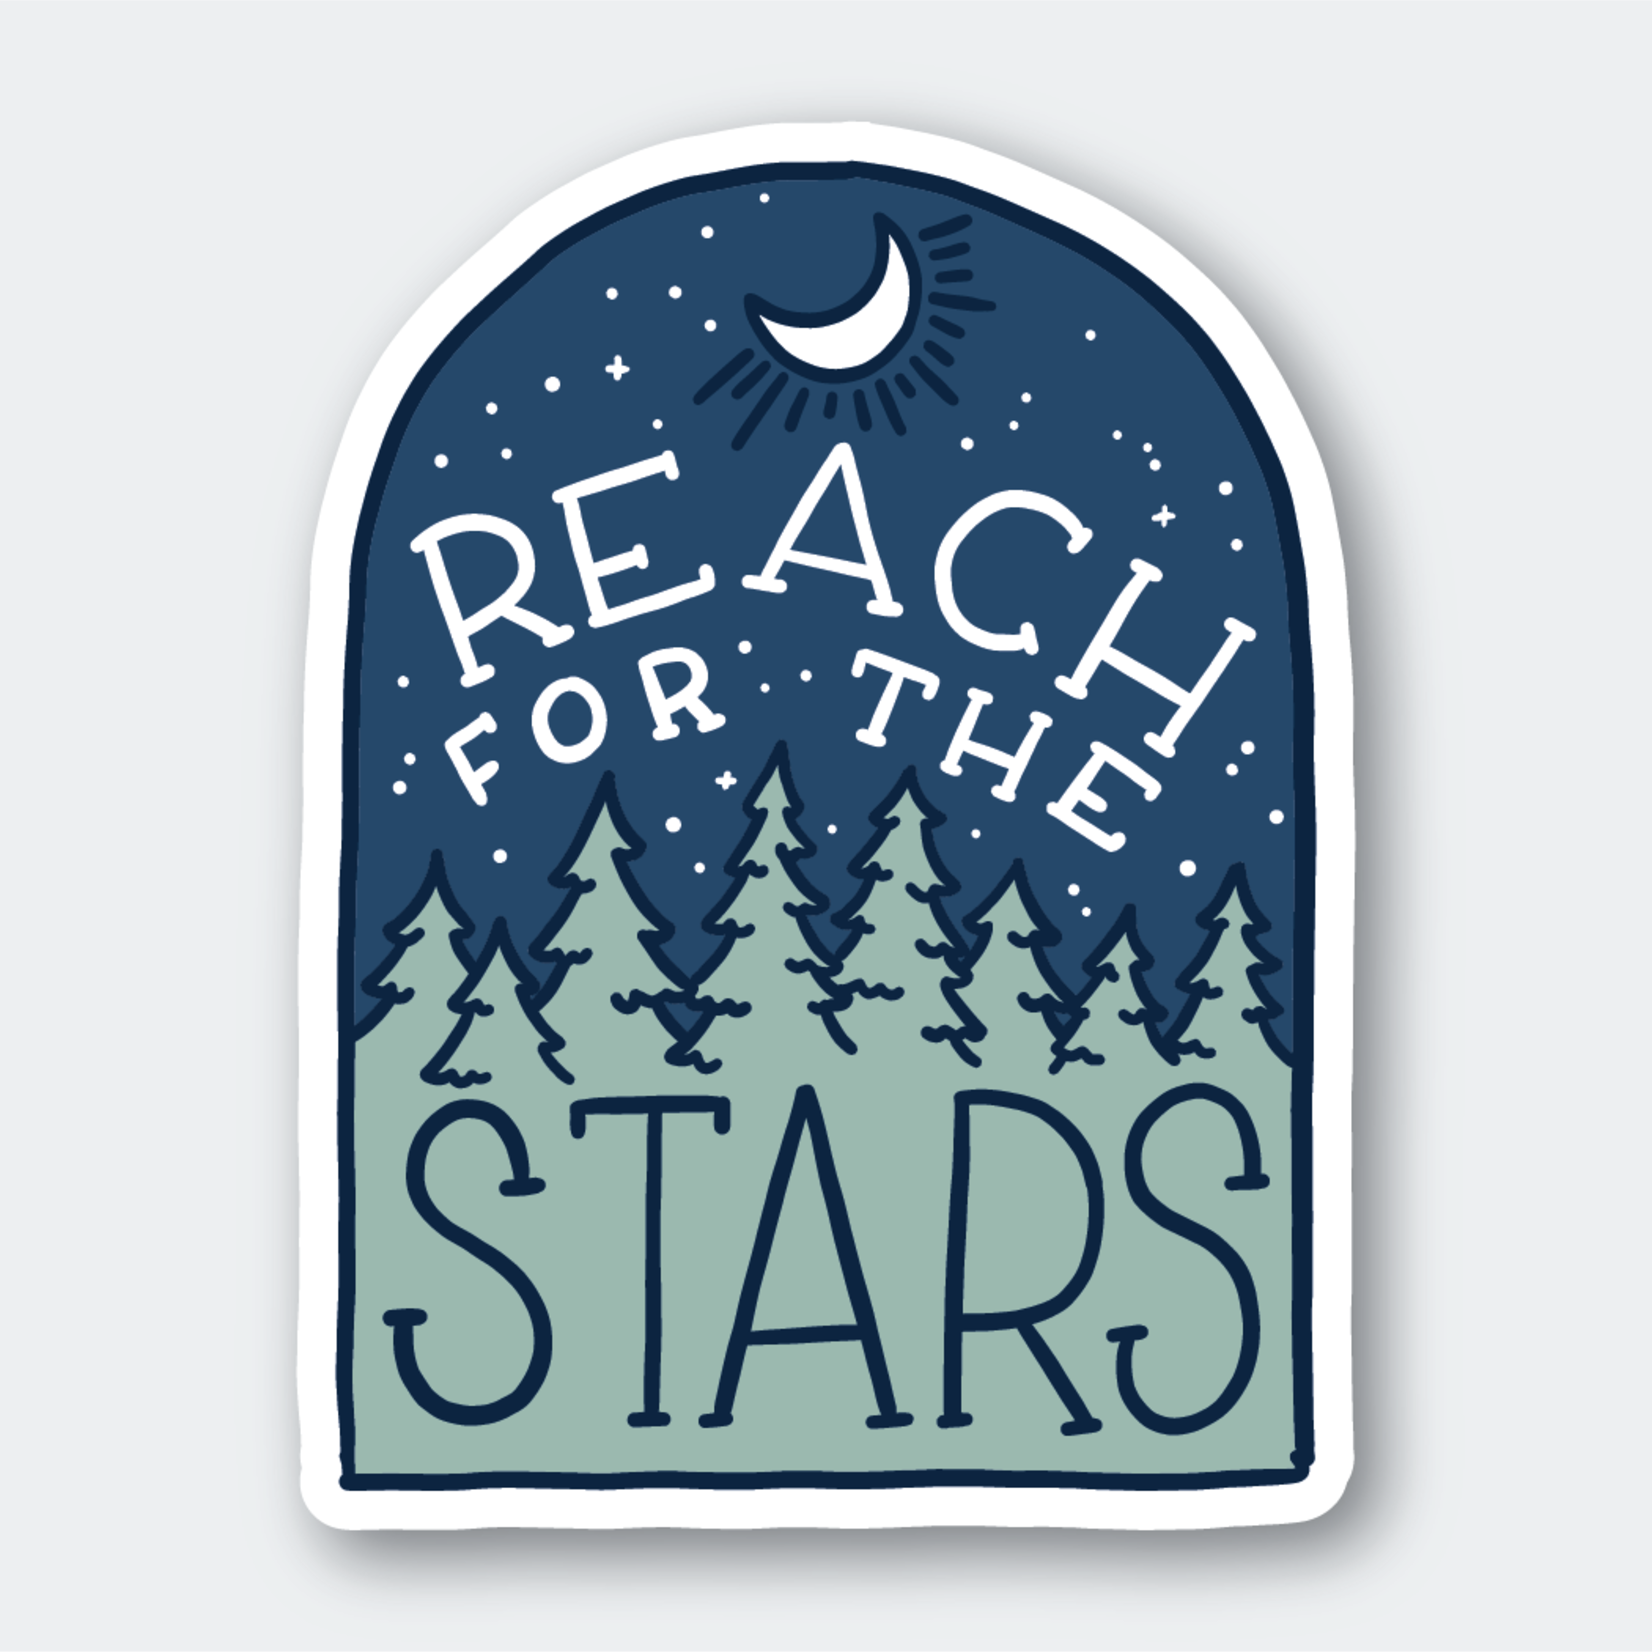 Reach For The Stars Sticker DNO